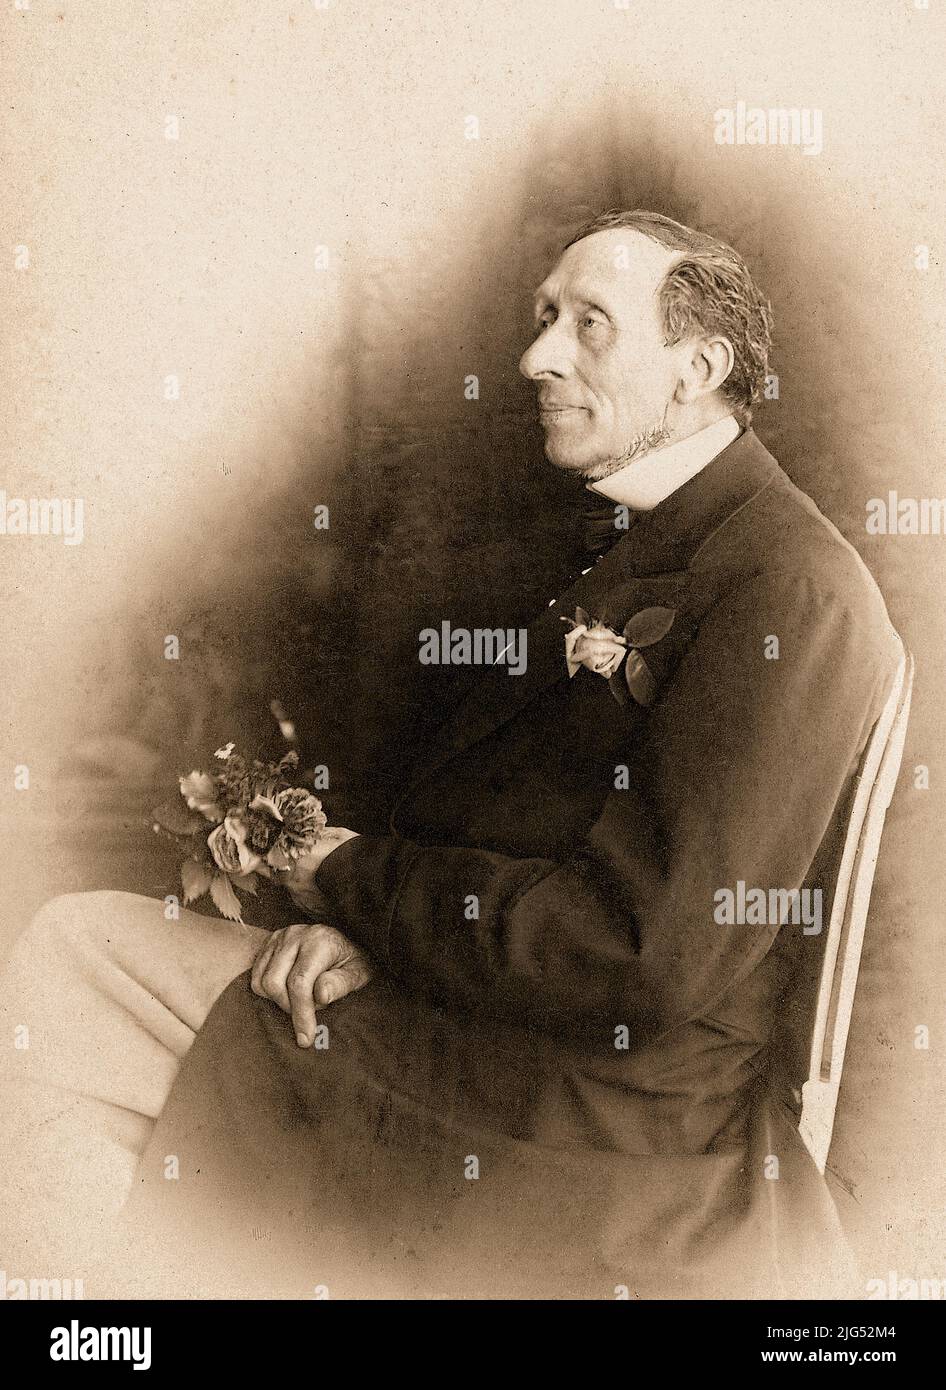 Hans Christian Andersen Writer of tales - portrait by Georg E..Hansen, 1870 Stock Photo